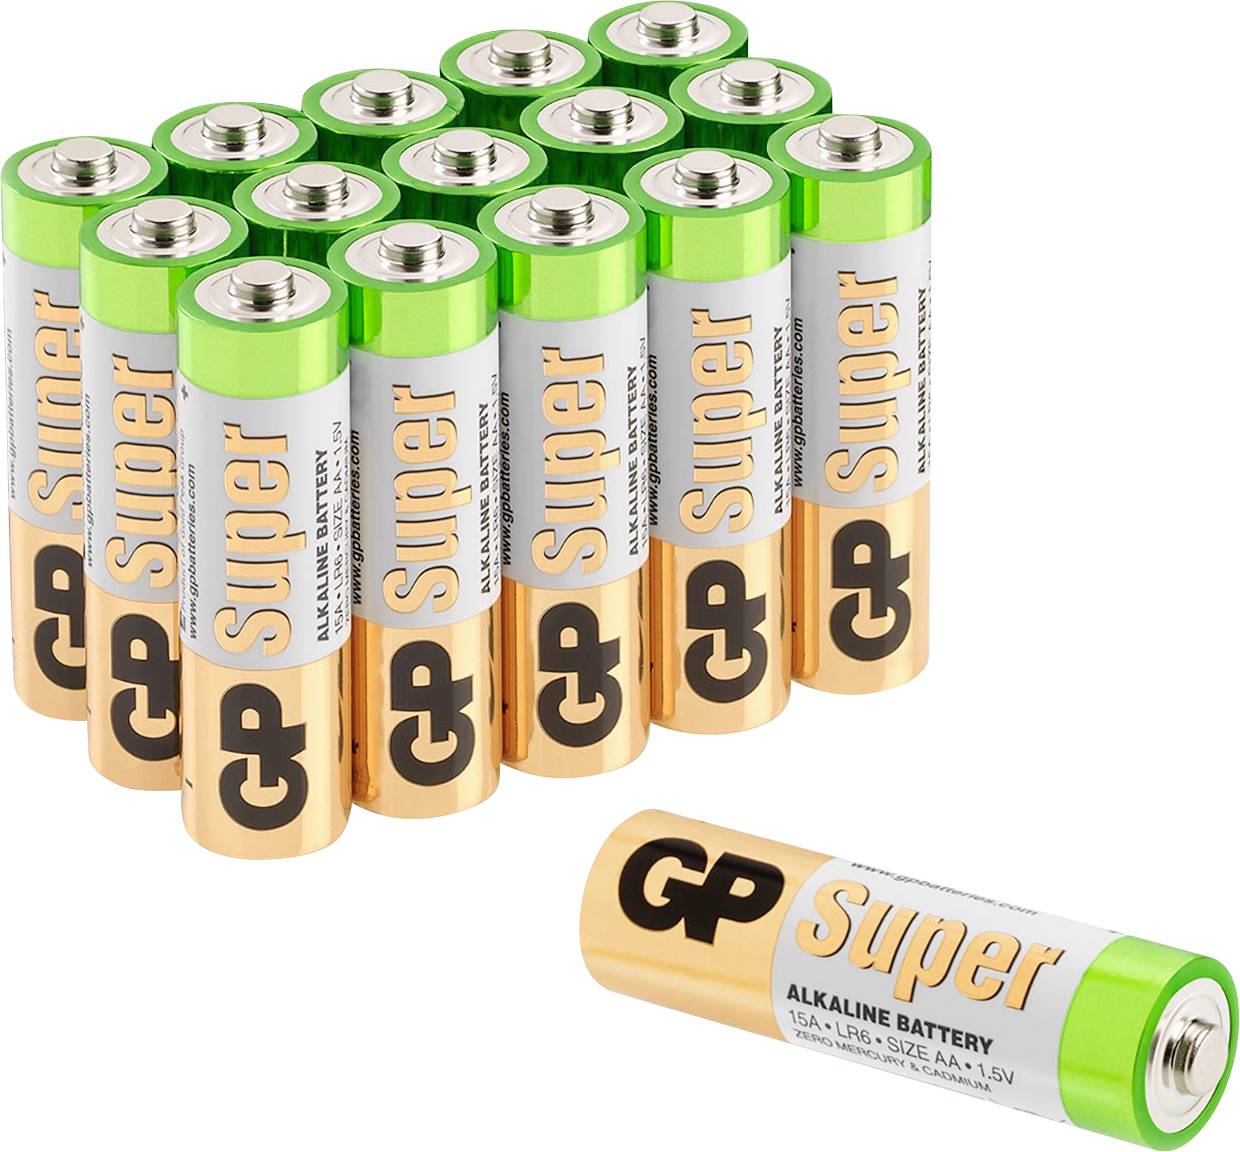 Gp alkaline battery. Батарейка lr03(AAA) super. GP super Alkaline Battery 4+4 8 шт. Аккумуляторные батарейки GP super Alkaline. GP super Alkaline Battery Bulk.